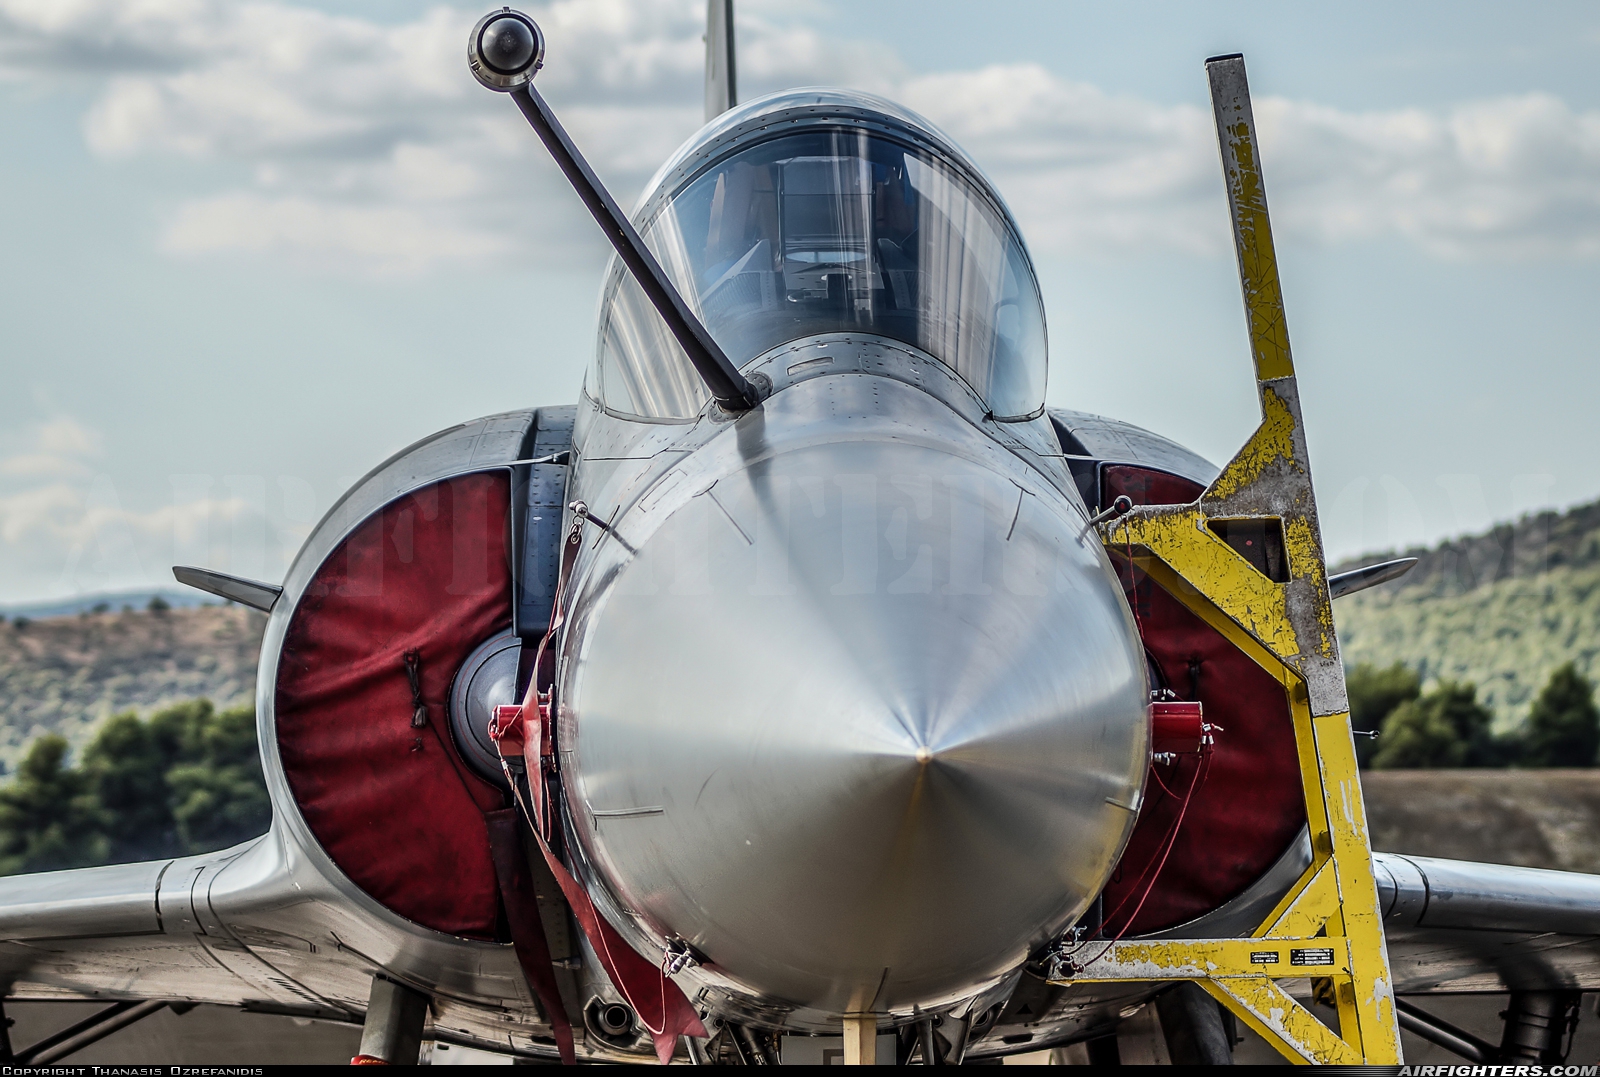 Greece - Air Force Dassault Mirage 2000-5EG 547 at Tanagra (LGTG), Greece